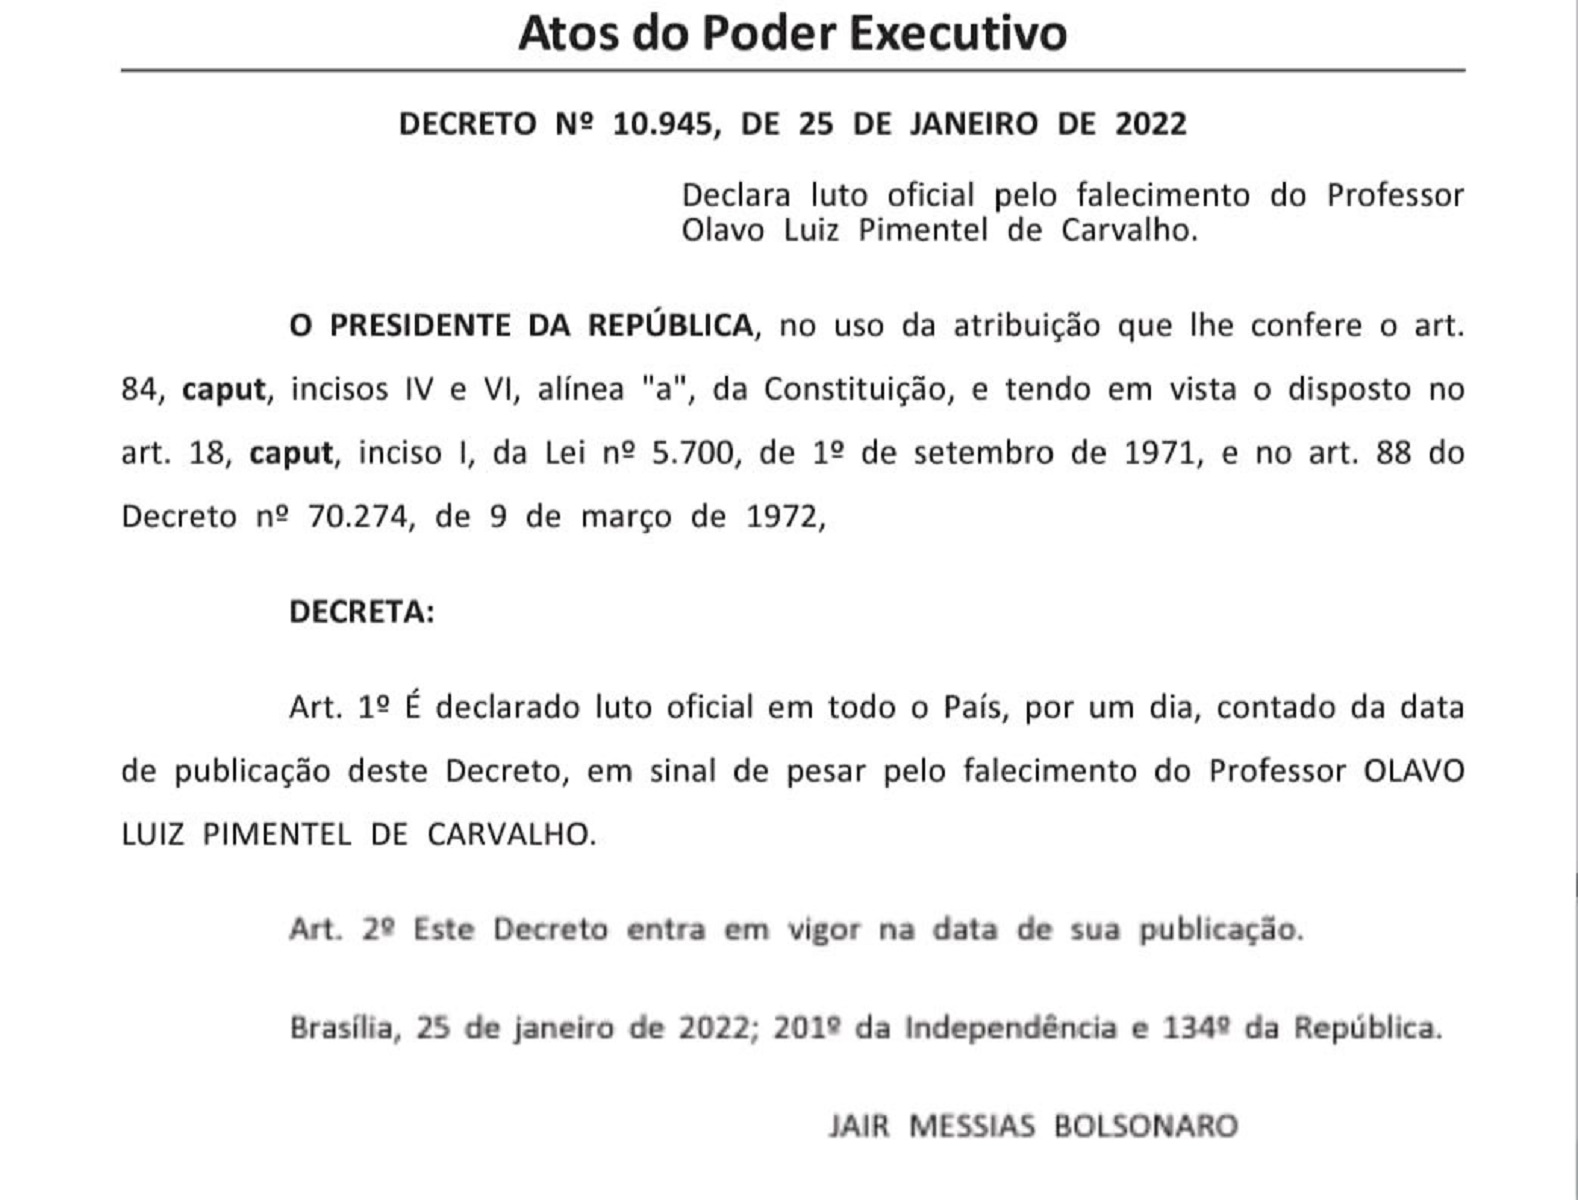 Bolsonaro decreta luto oficial após falecimento de Olavo de Carvalho